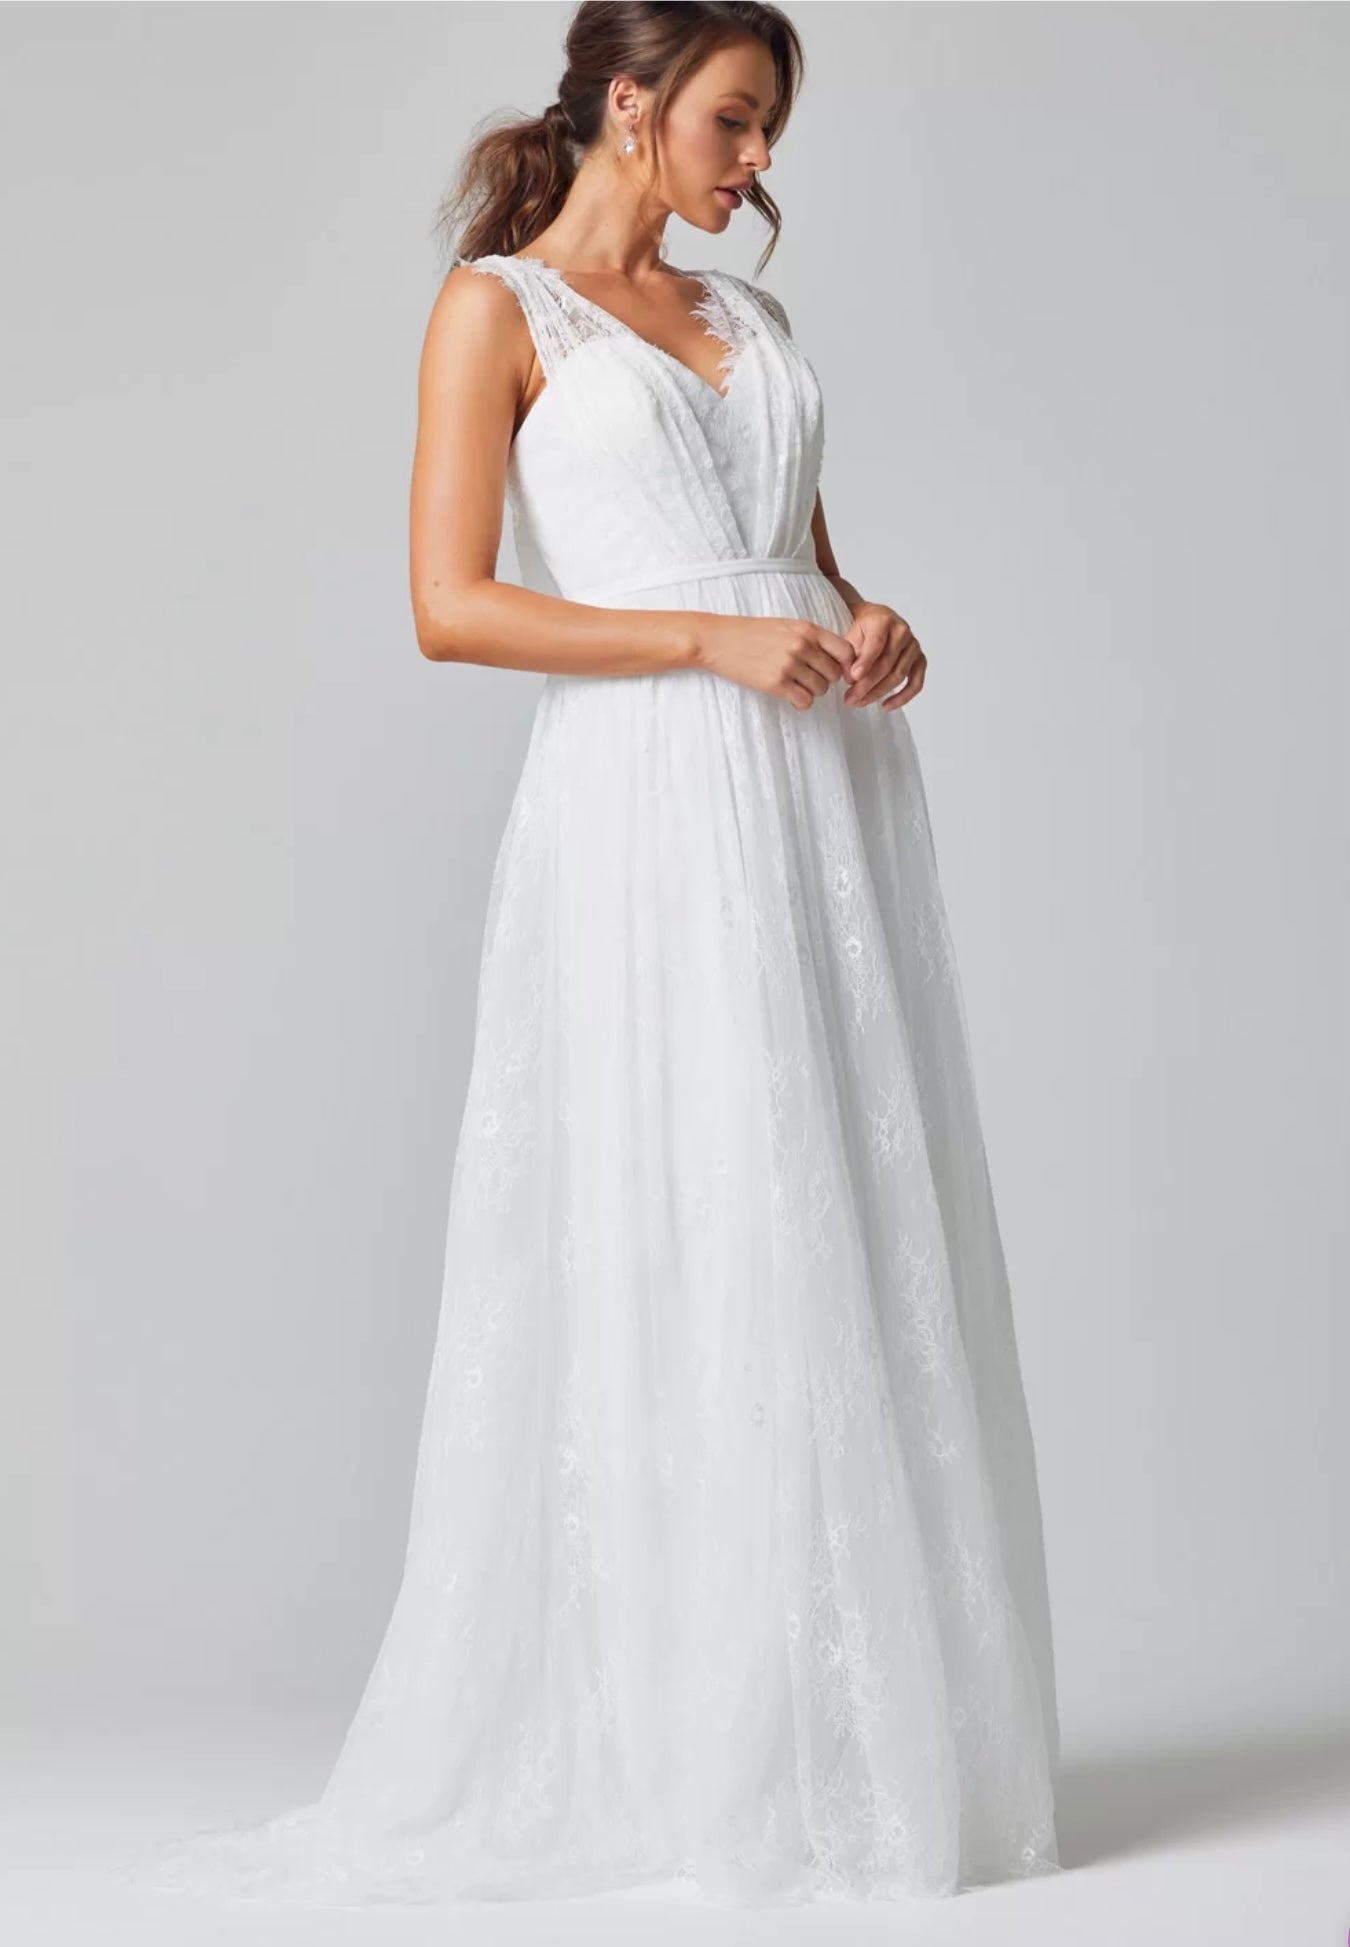 Melody vintage white wedding dress